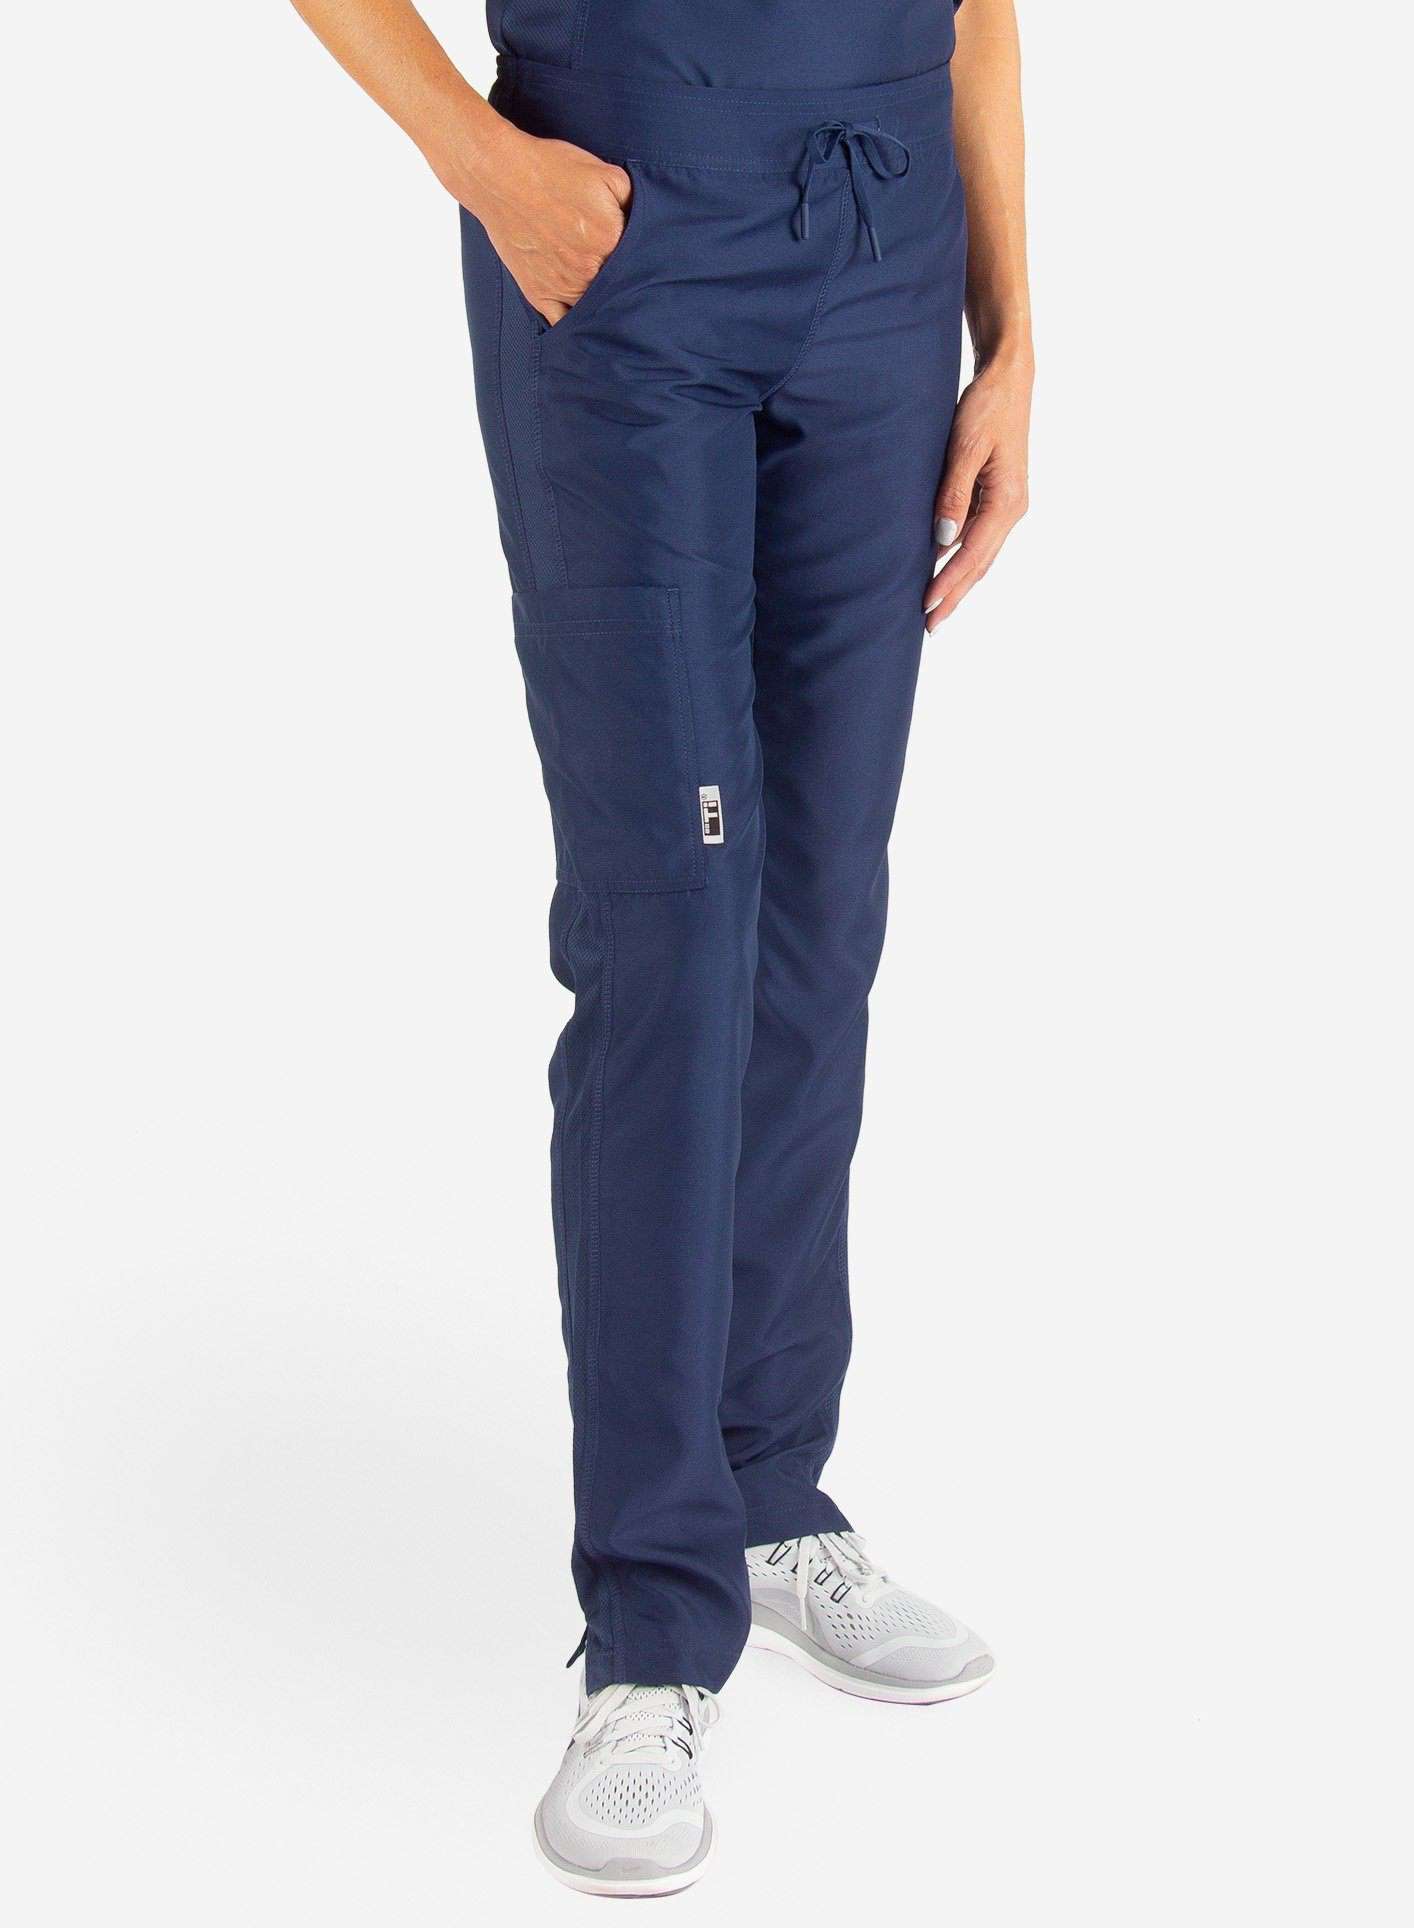 Women's Slim Fit Scrub Pants in navy-blue